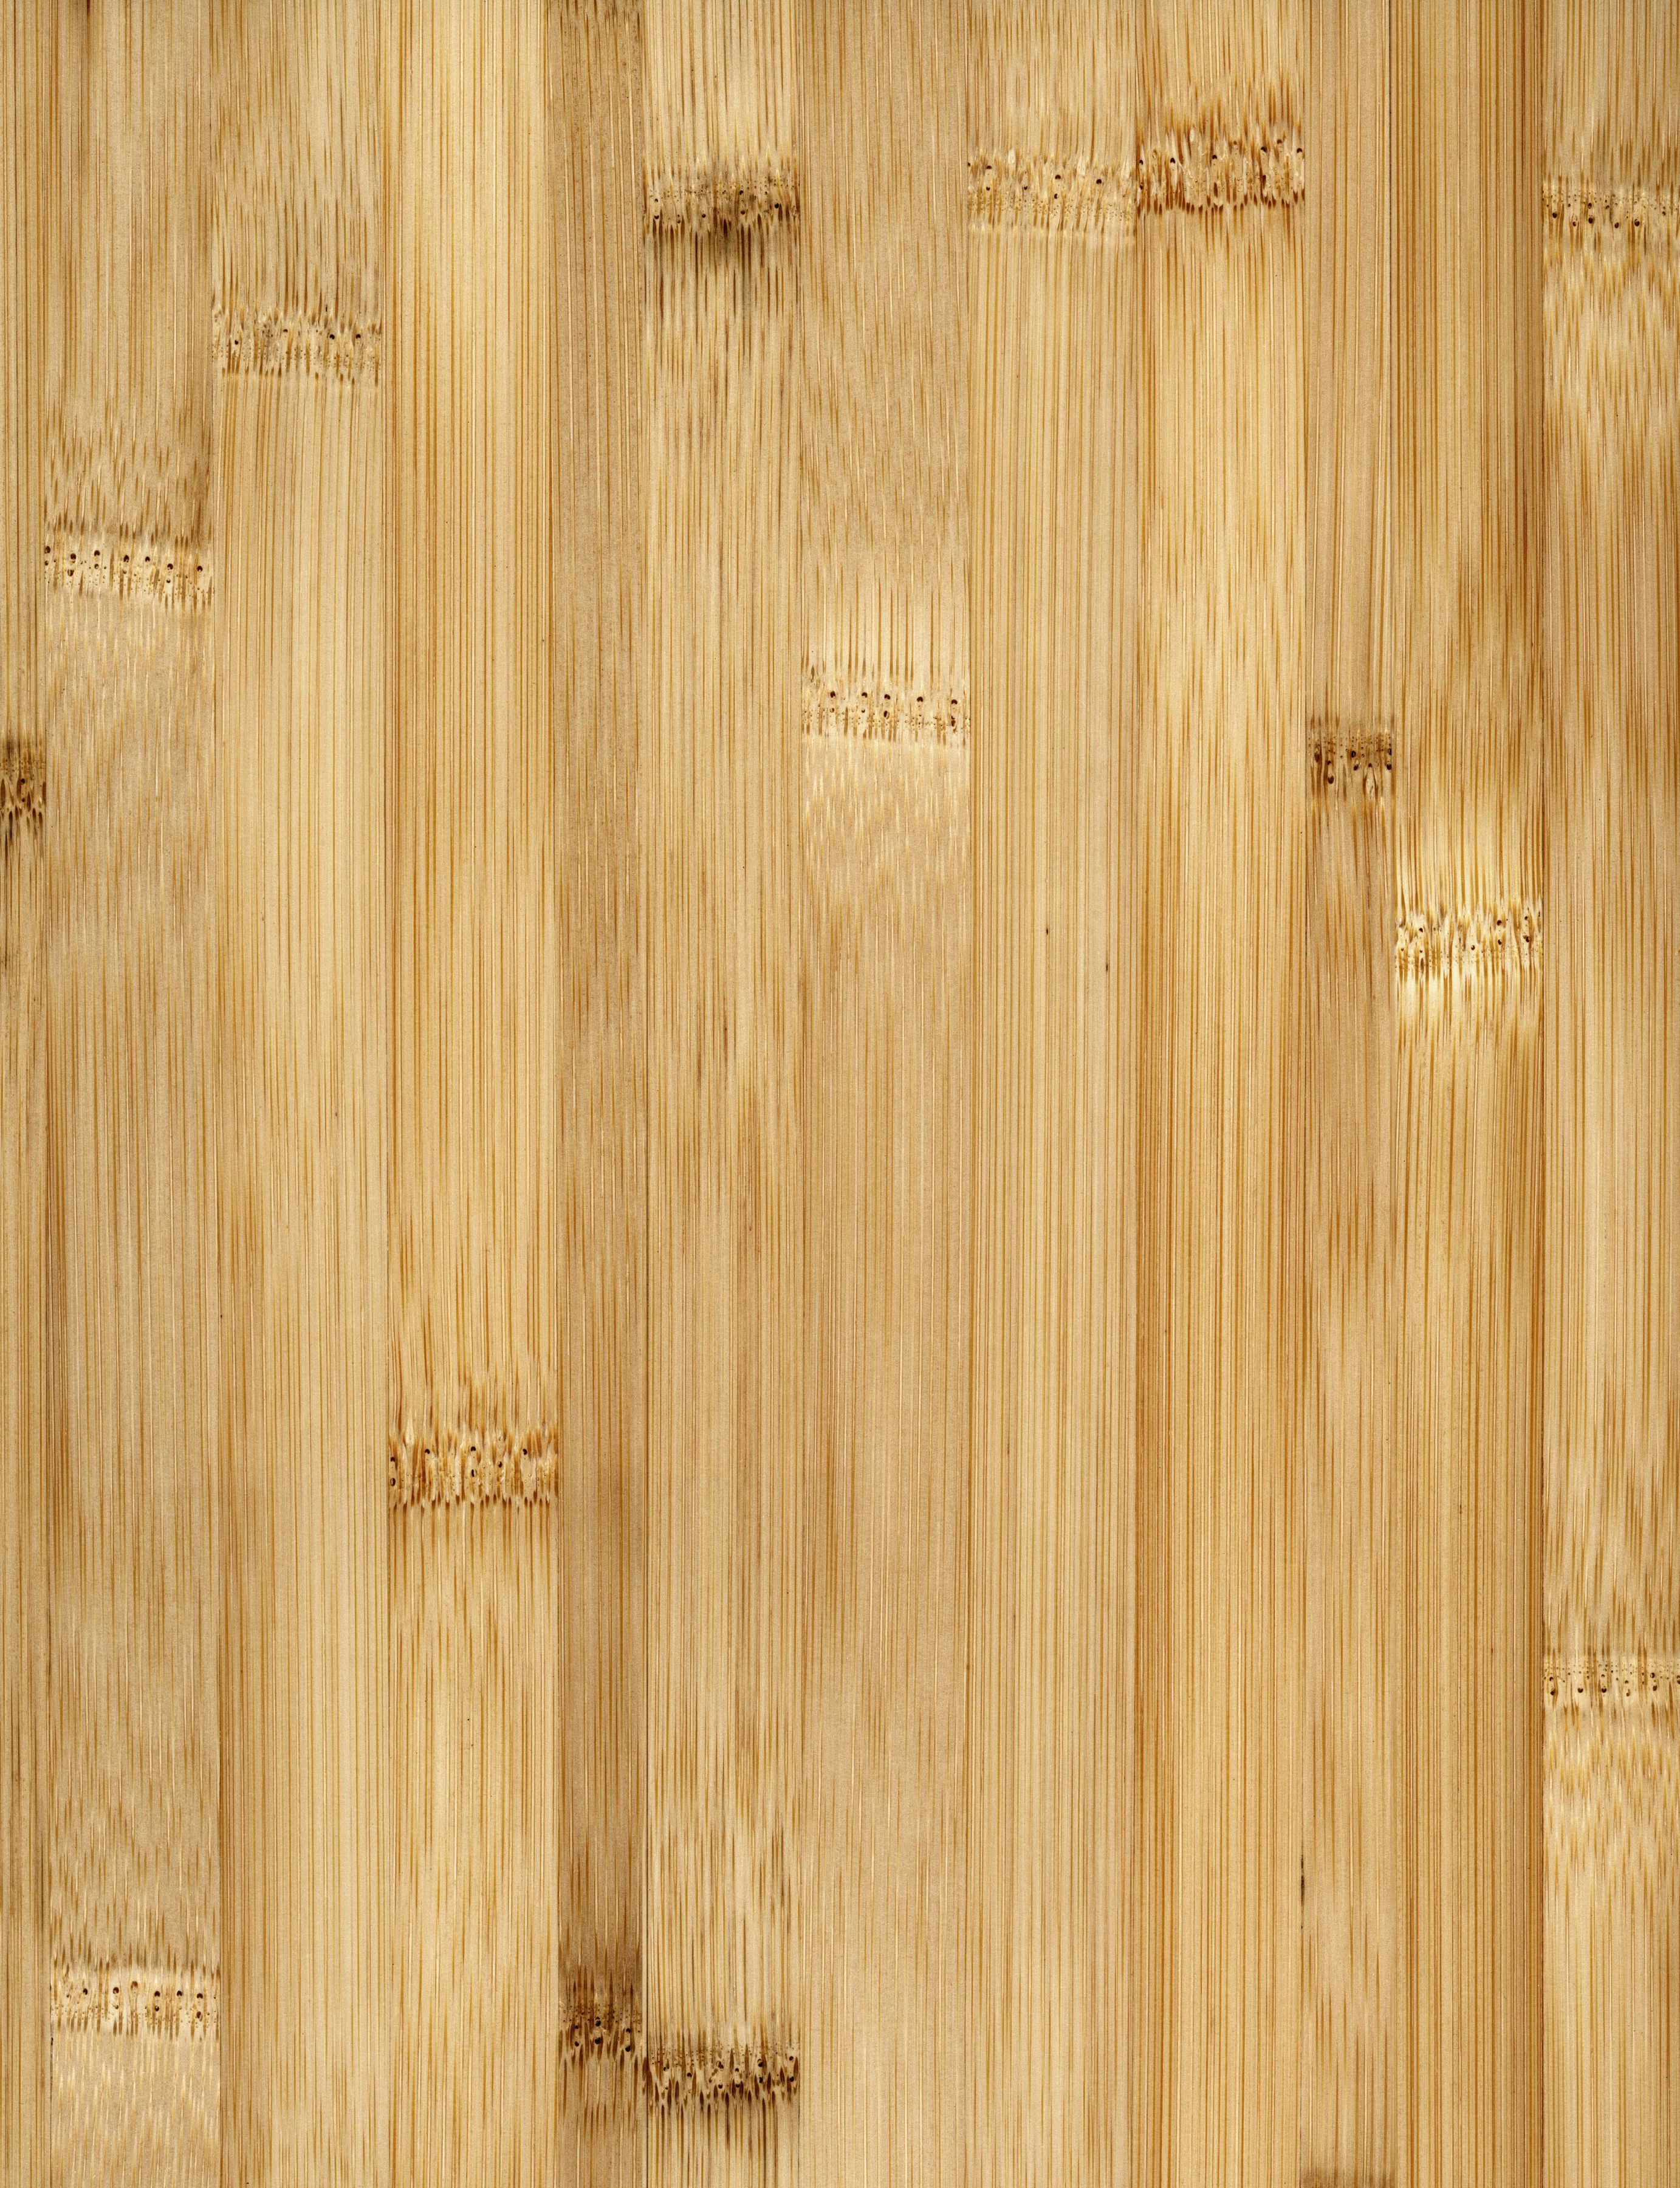 22 Elegant Grades Of Oak Hardwood Flooring 2024 free download grades of oak hardwood flooring of bamboo flooring buying guide with bamboo floor full frame 200266305 001 59a4517bd963ac00118a3d9f